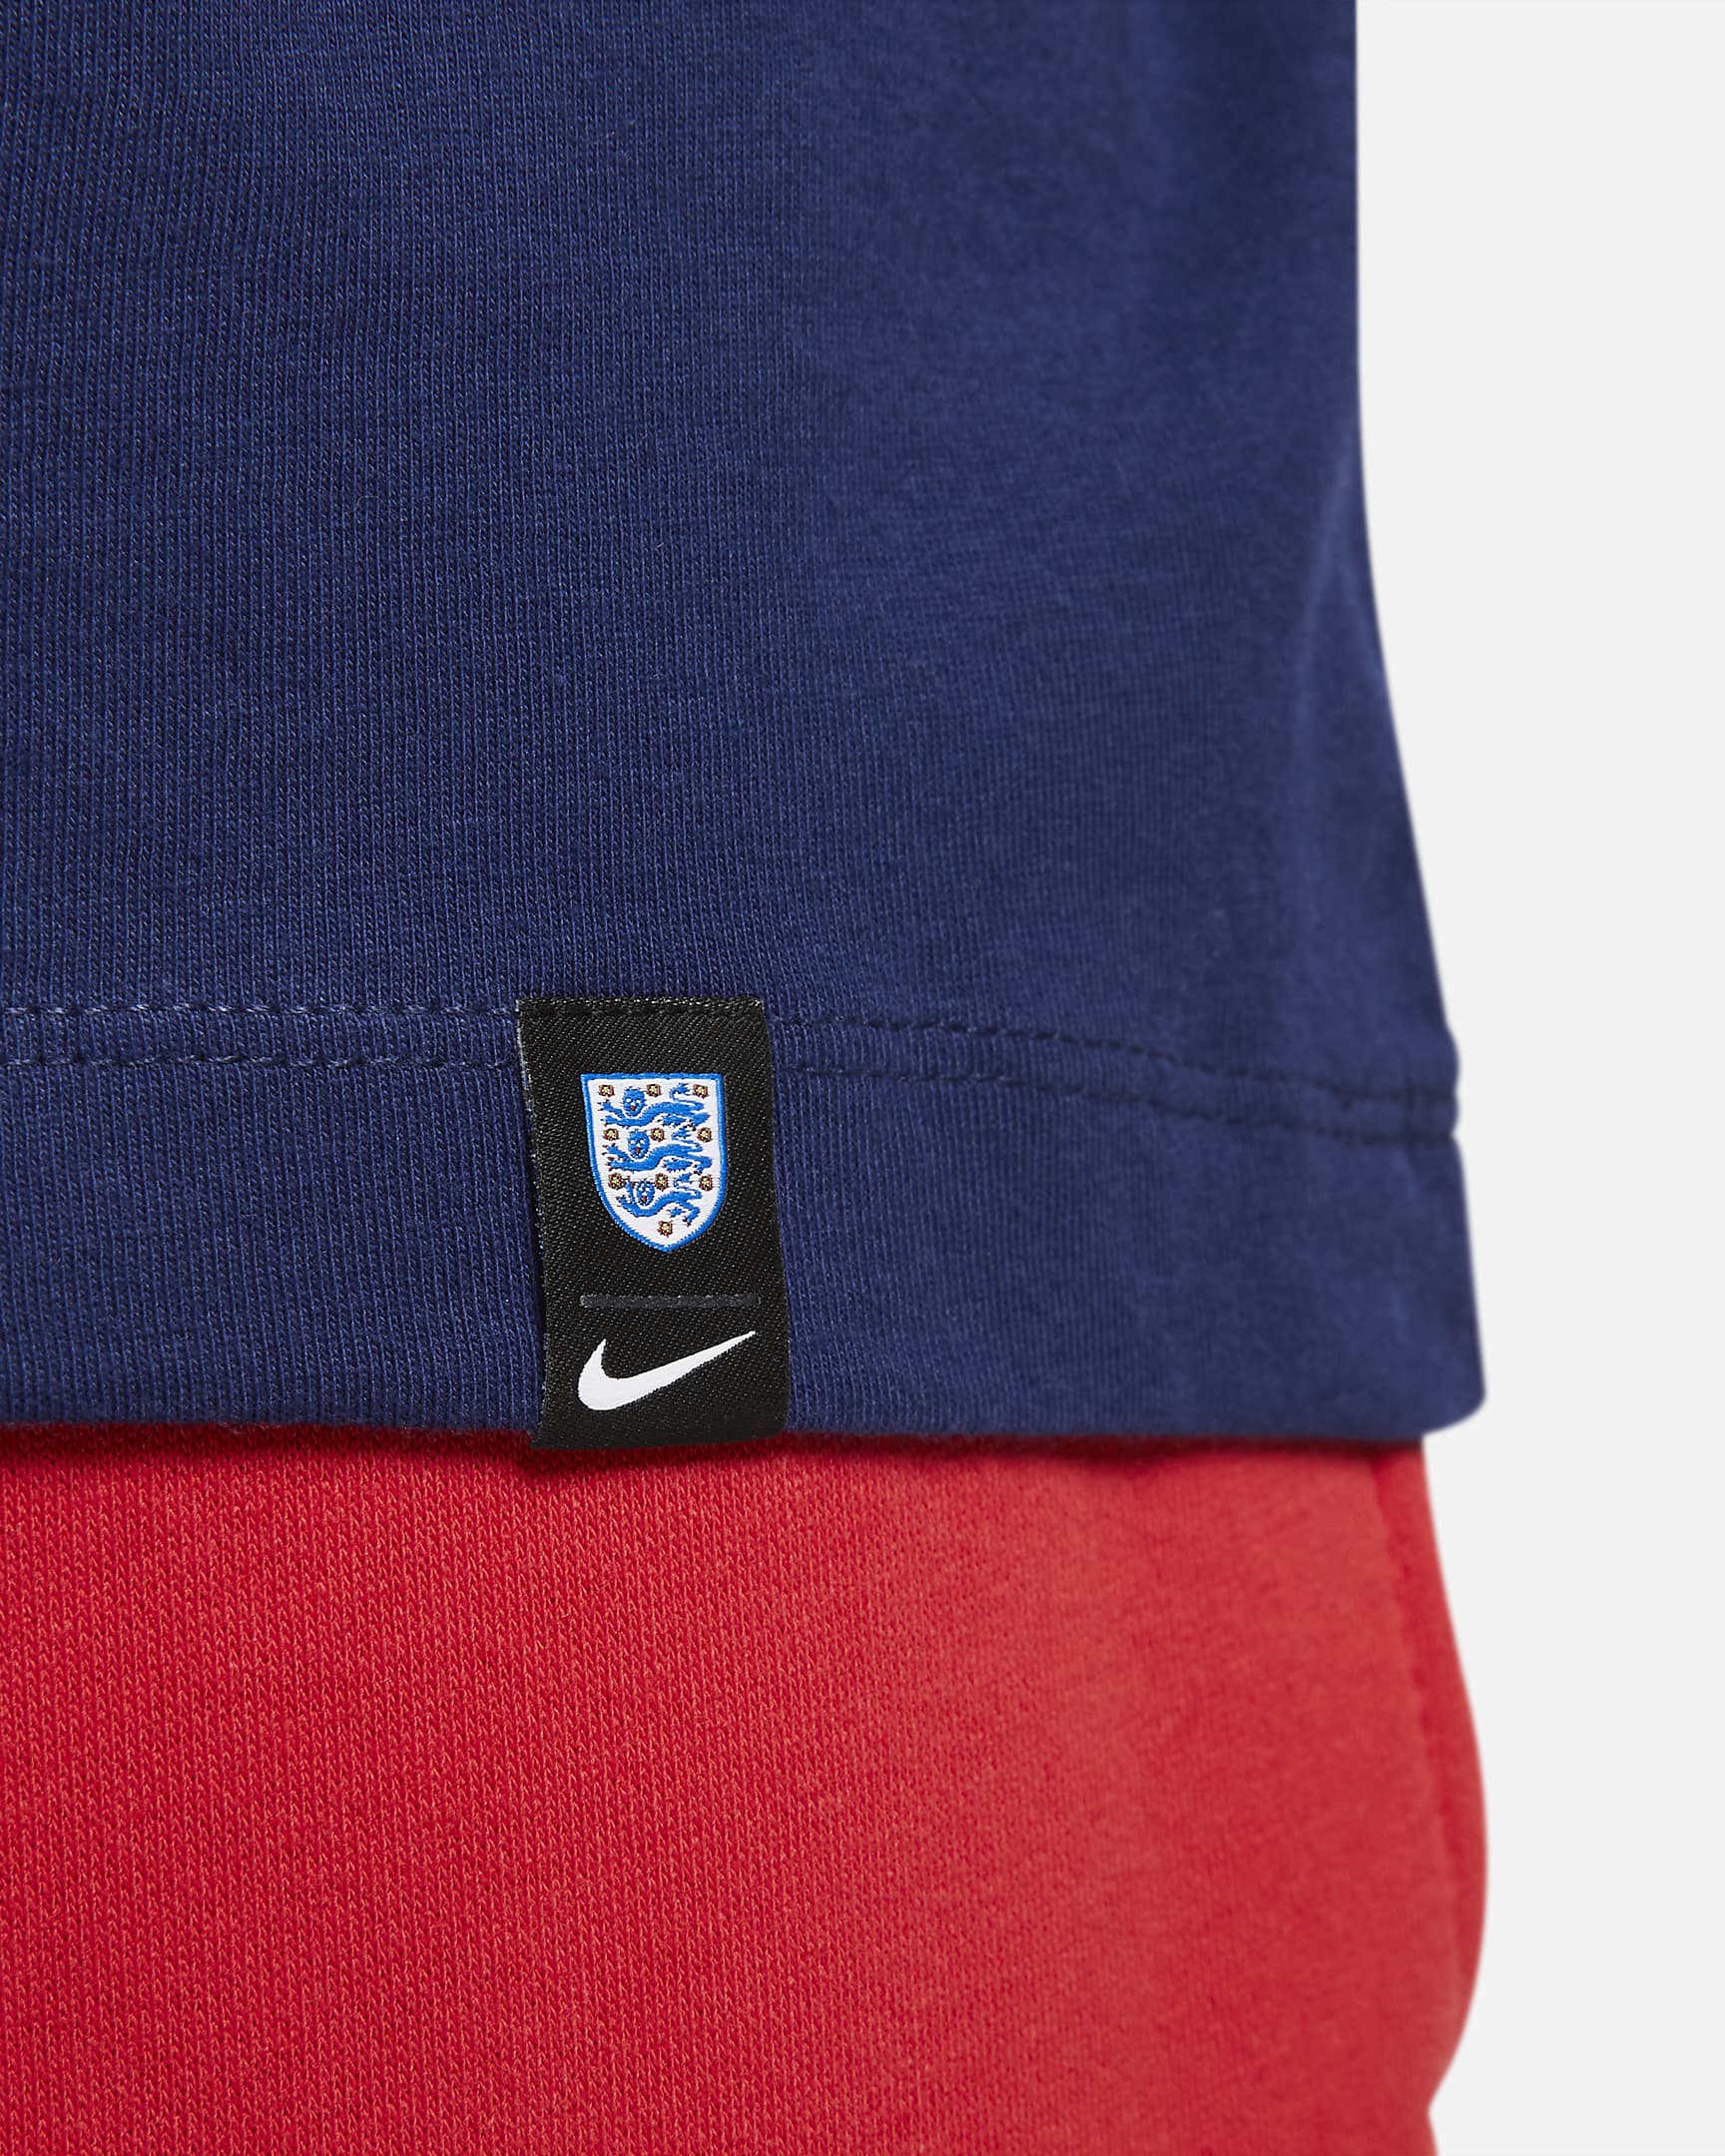 England Men's JDI T-Shirt. Nike UK